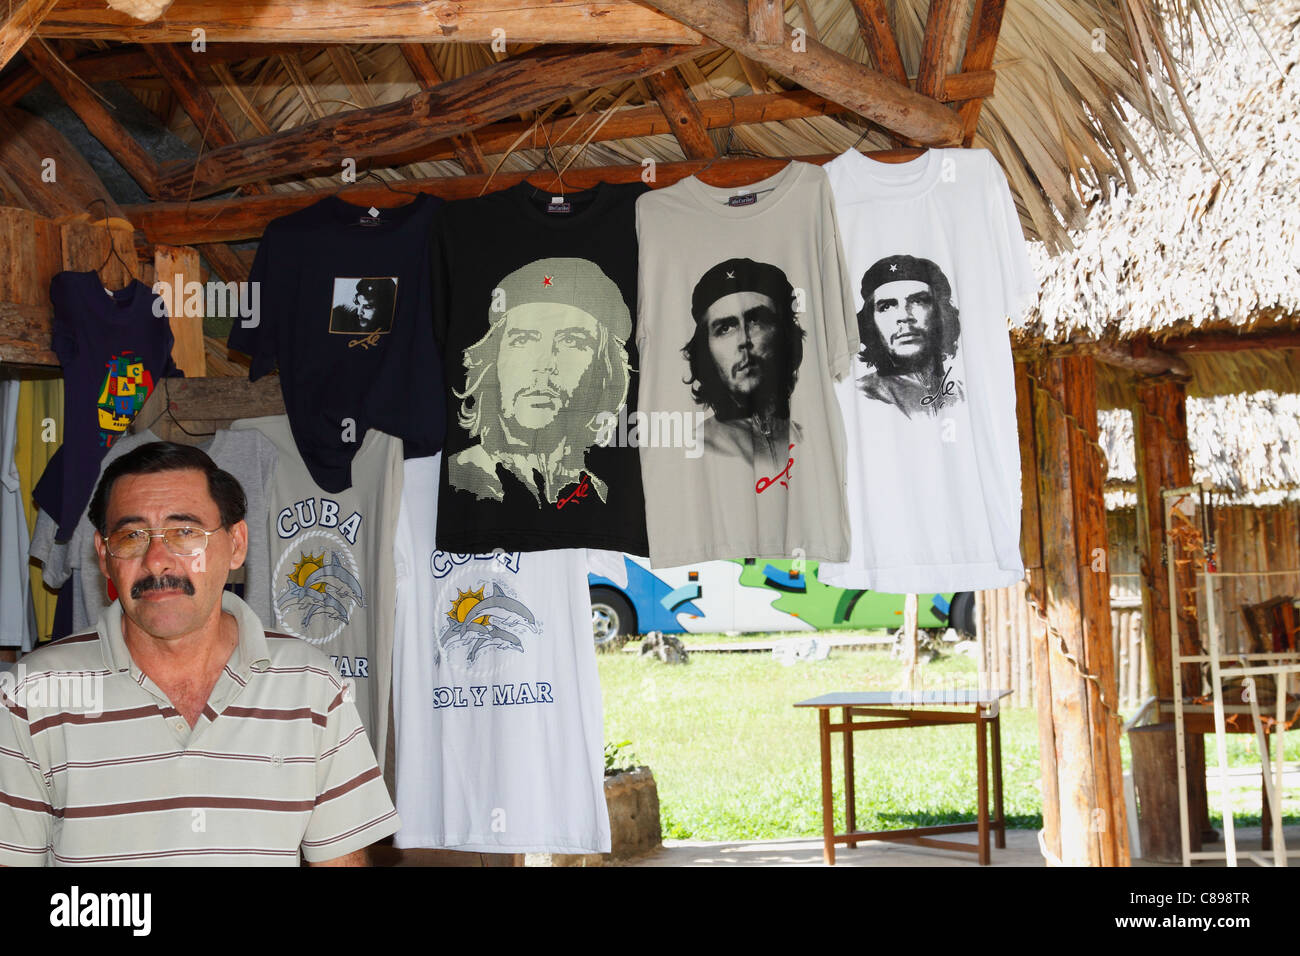 Cuban salesman and Che Guevara printed t-shirts for sale in Cuba, November, 2010 Stock Photo